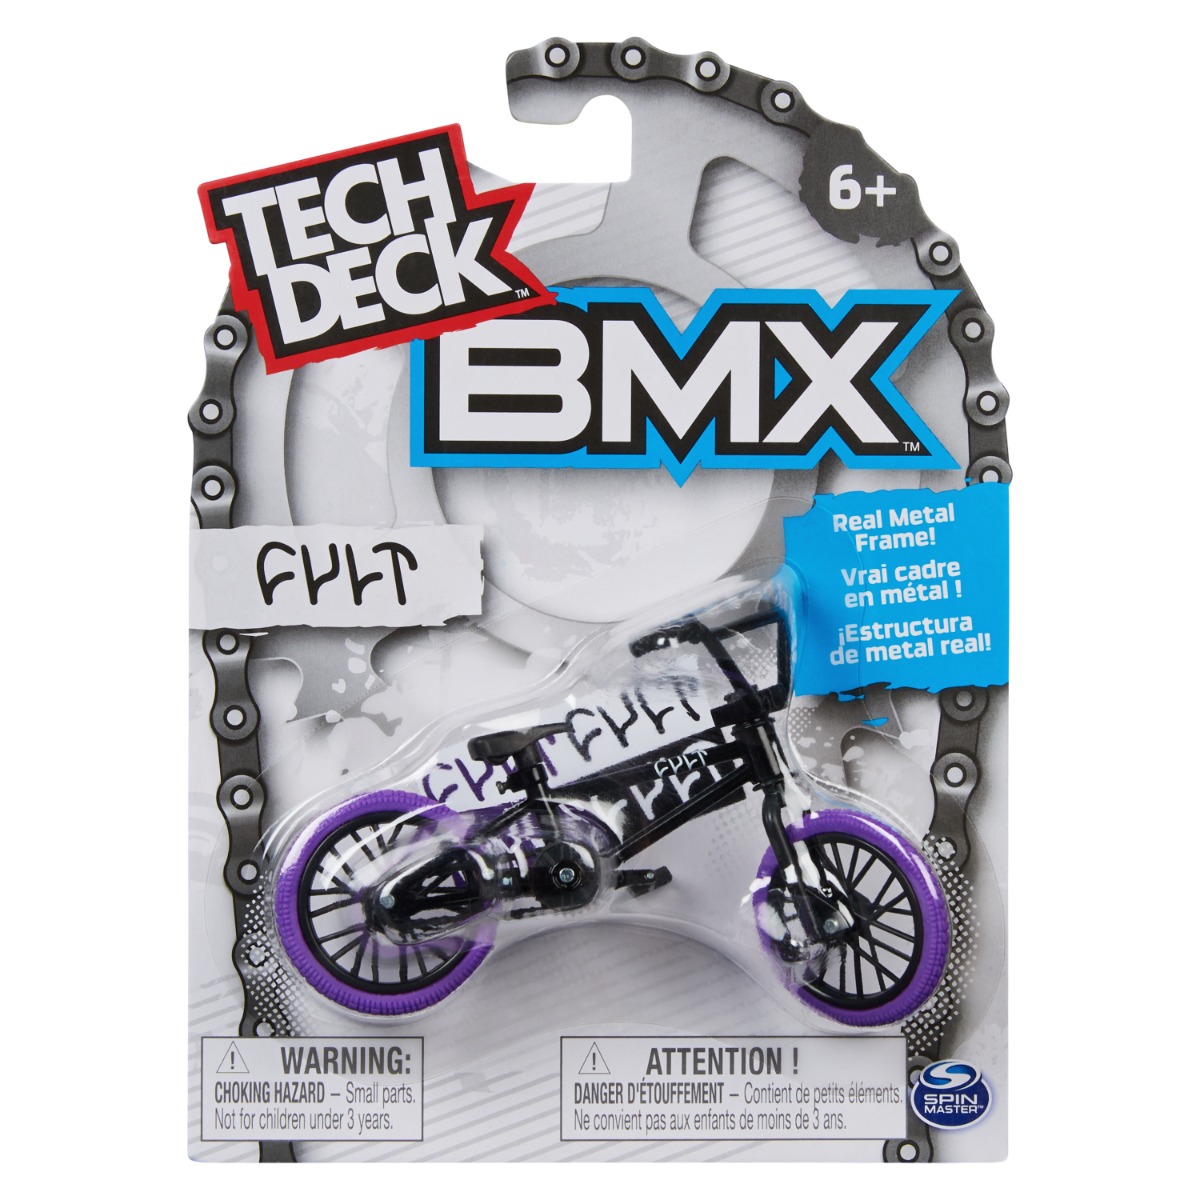 Mini BMX bike, Tech Deck, Cult, 20140829